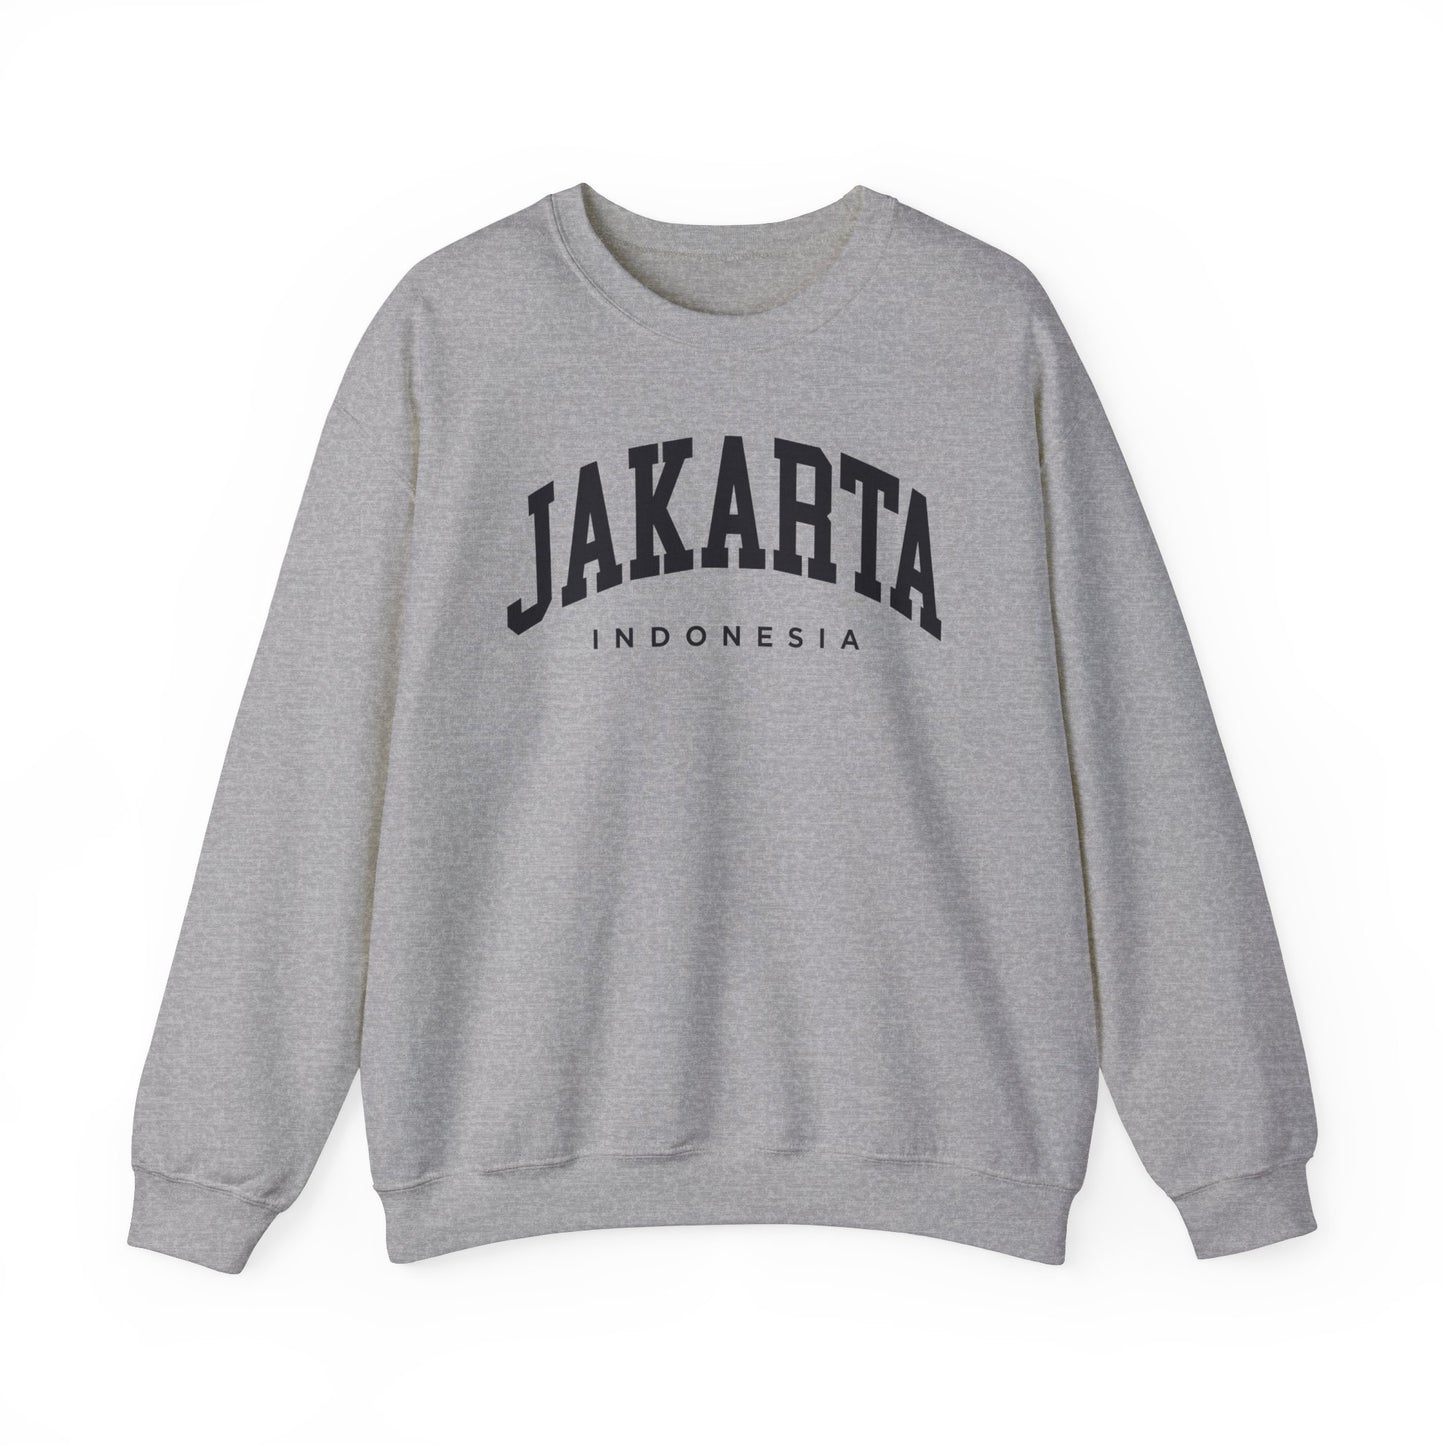 Jakarta Indonesia Sweatshirt